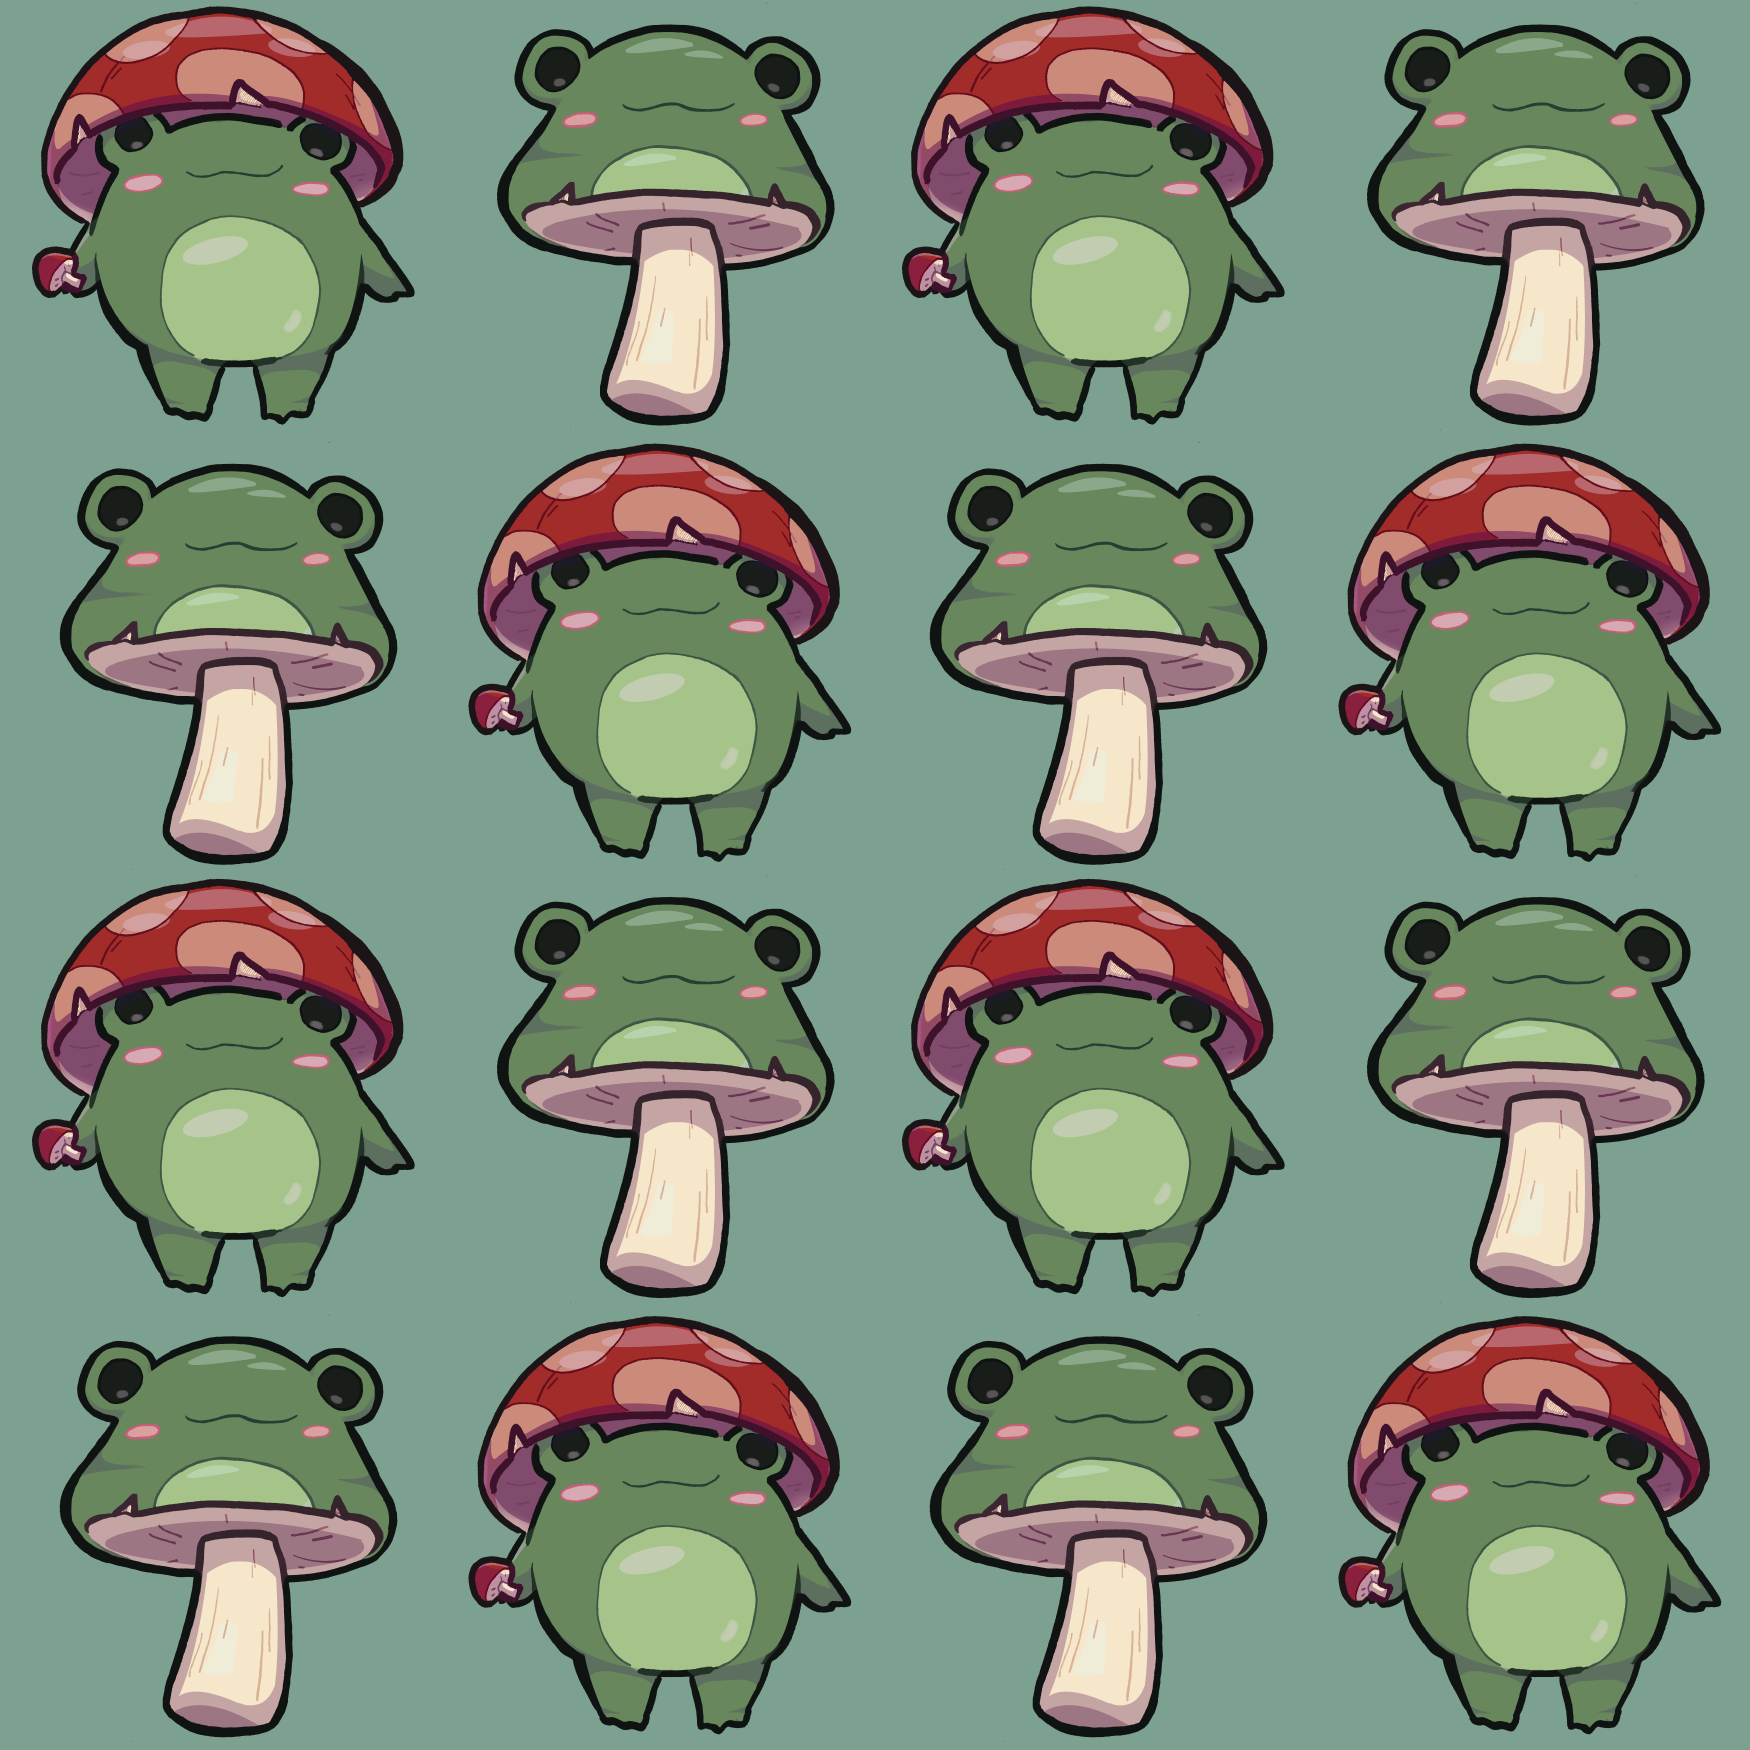 517 Cute Wallpaper Aesthetic Frog Pics - MyWeb